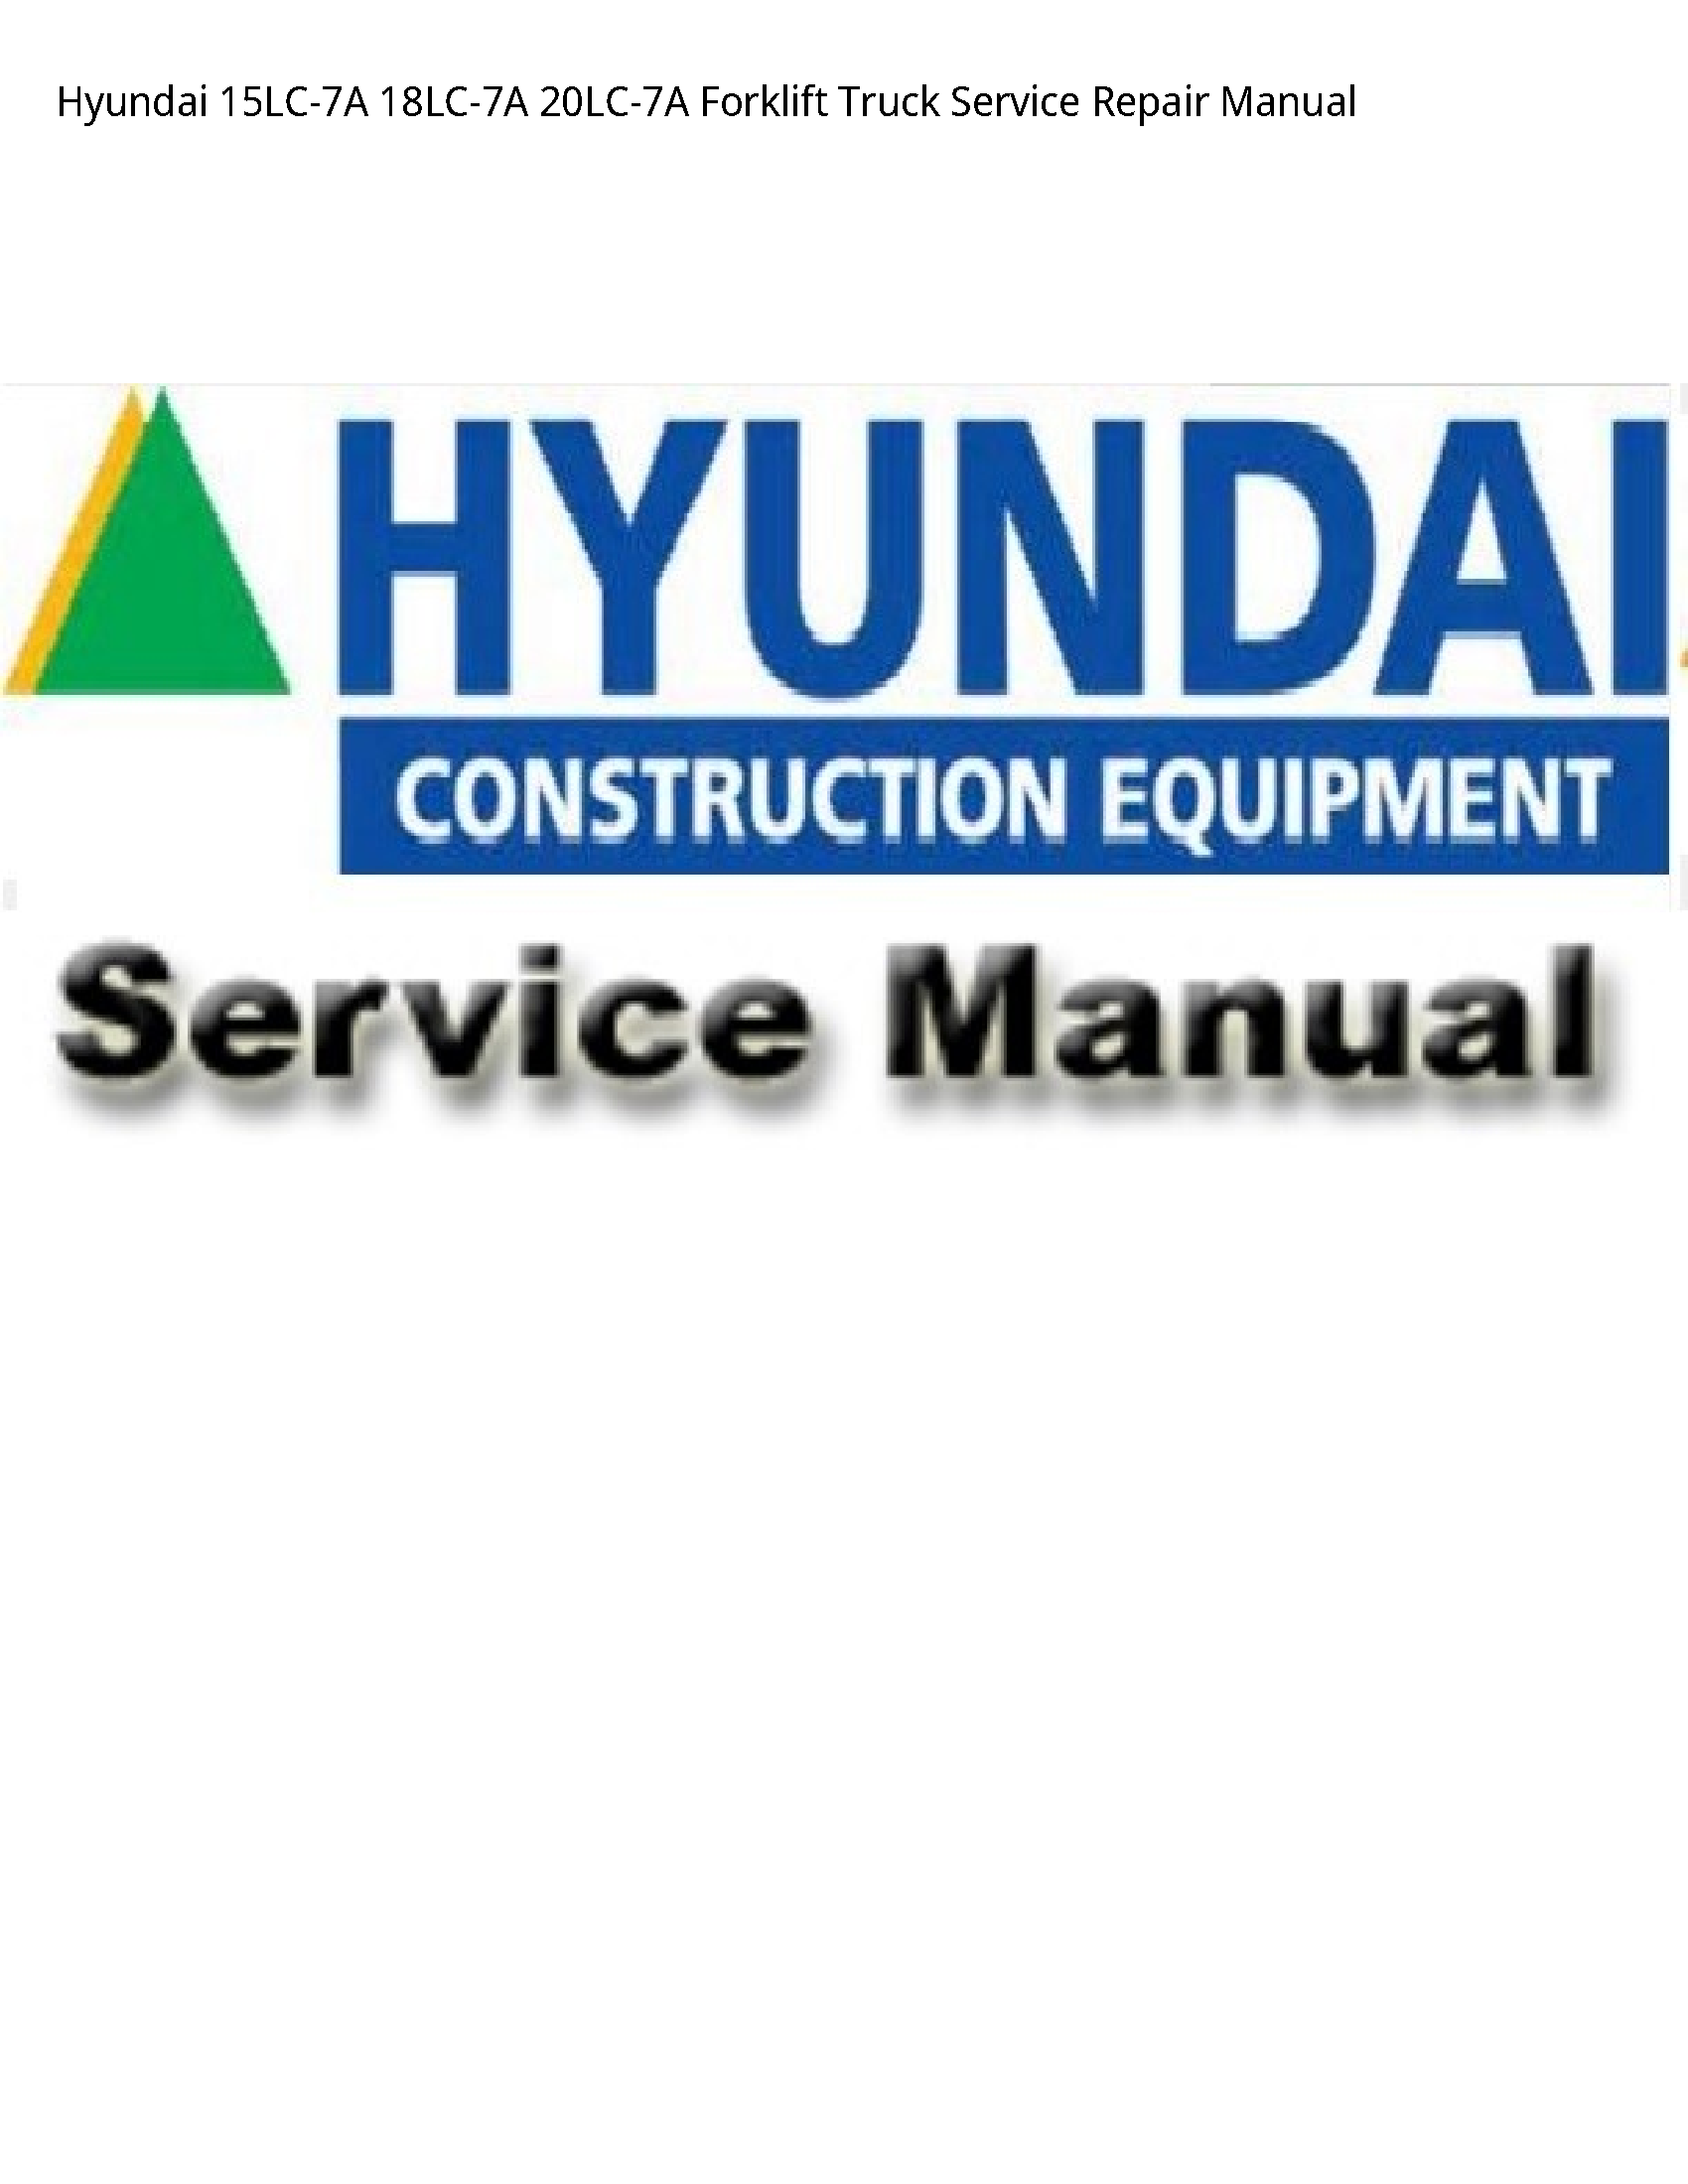 Hyundai 15LC-7A Forklift Truck manual